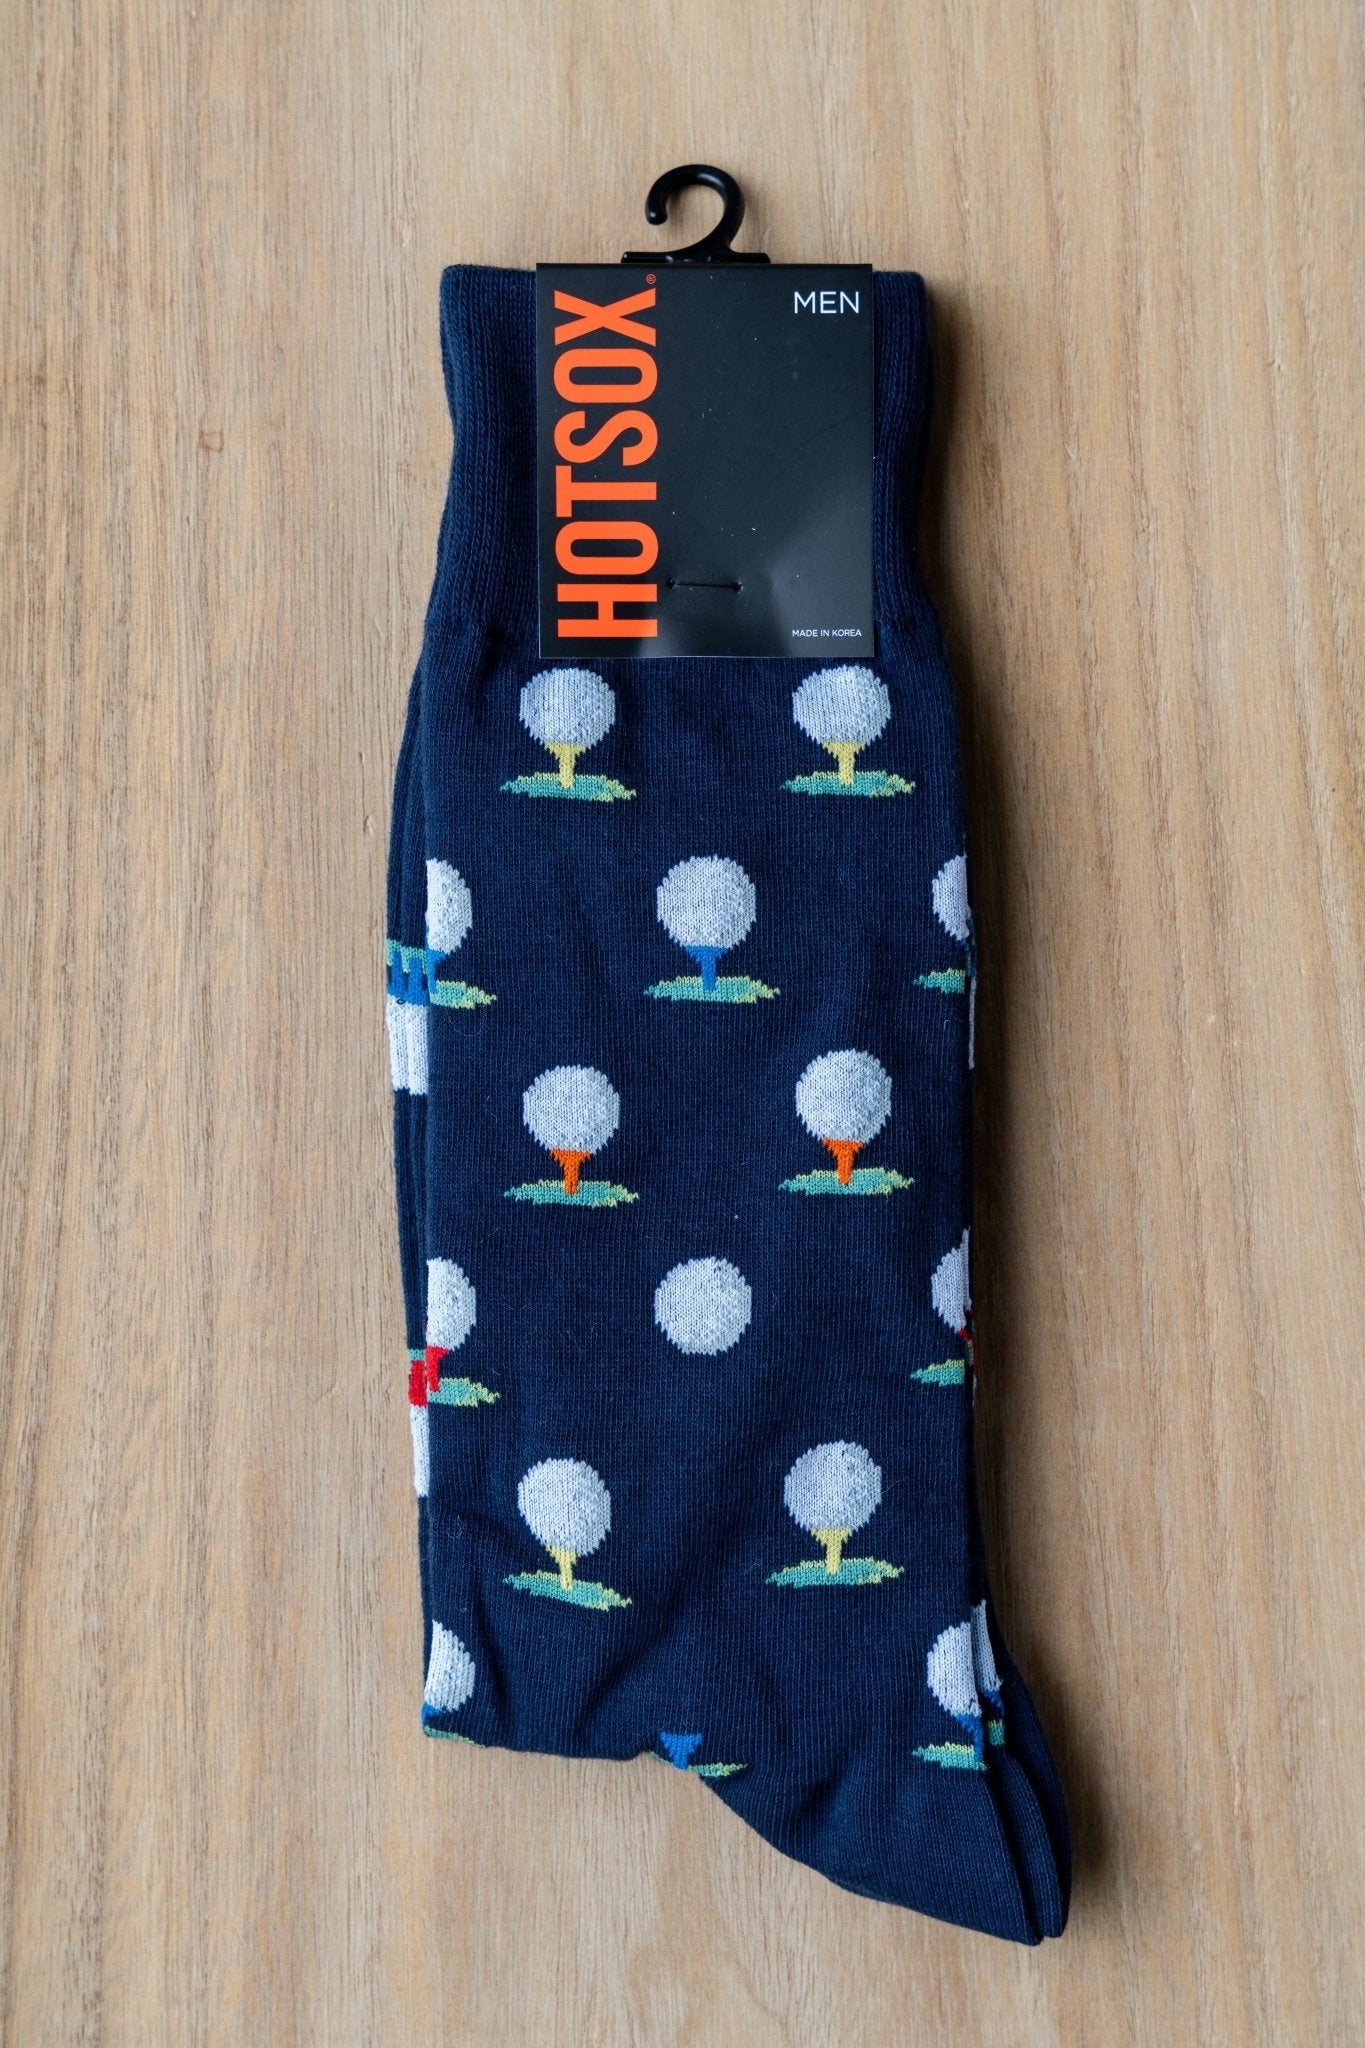 HotSox men's golf tee socks navy - Trendy Socks at Lush Fashion Lounge Boutique in Oklahoma City